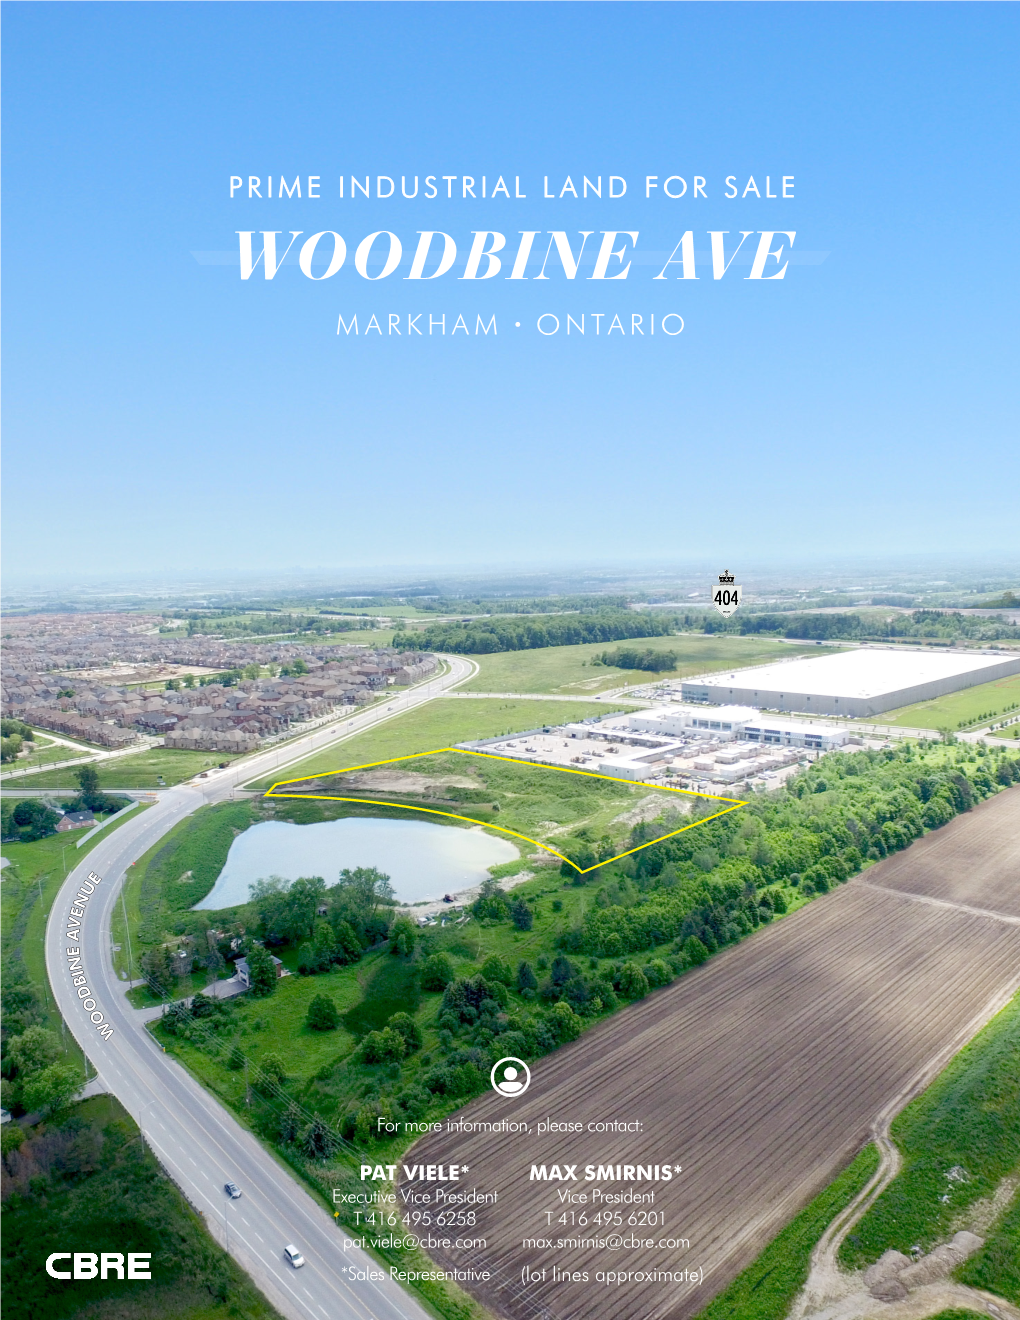 Woodbine Ave Markham ∙ Ontario